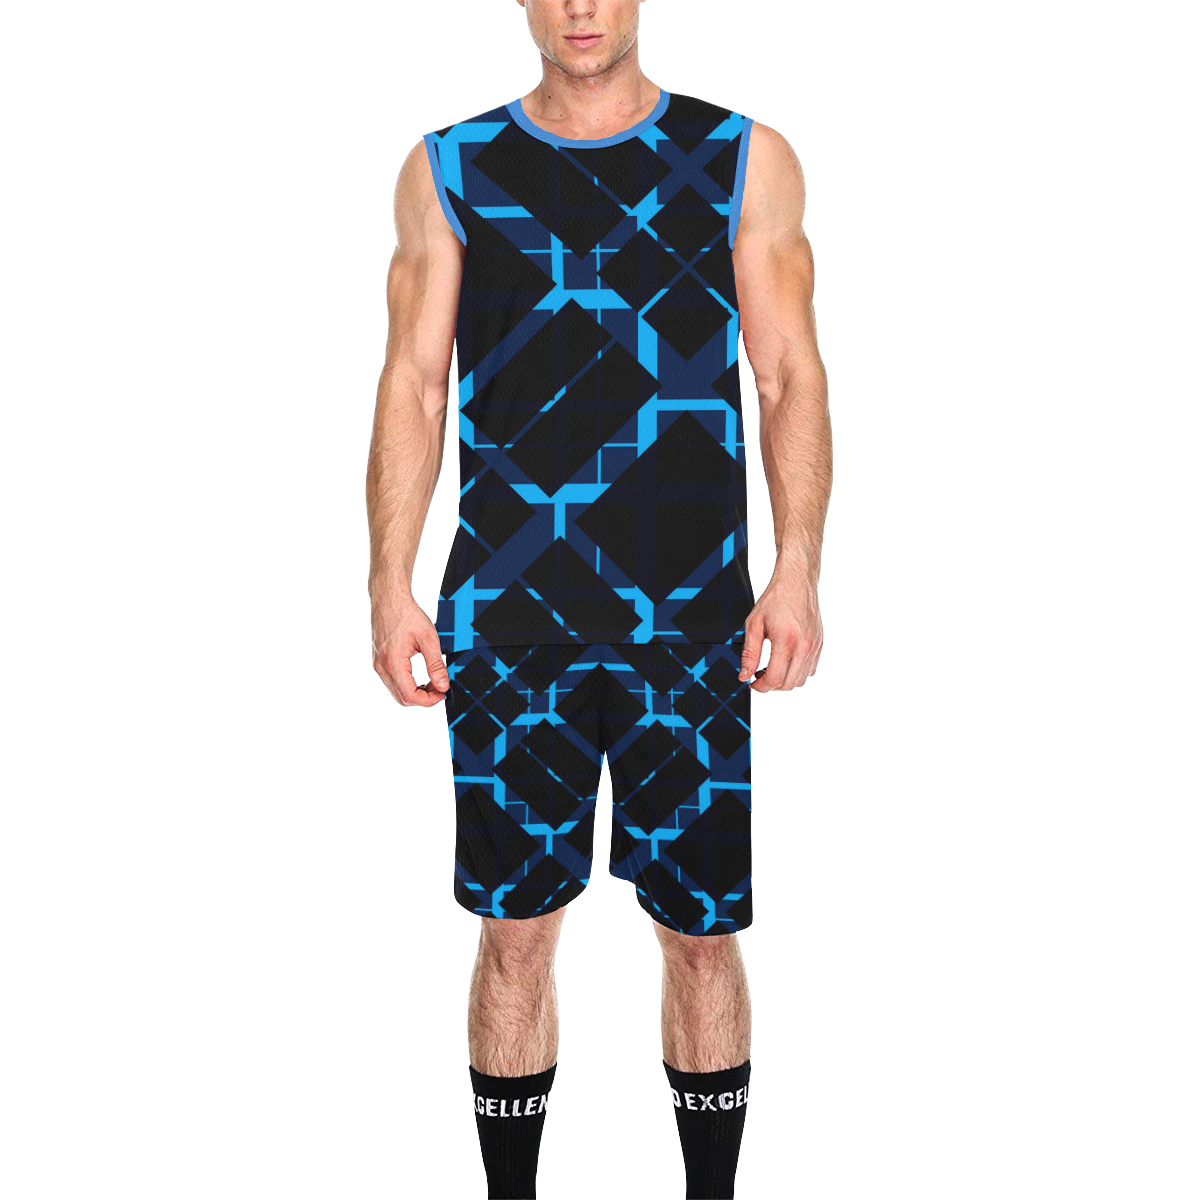 Diagonal Blue & Black Plaid Modern Team Basketball Uniforms All Over Print Basketball Uniform